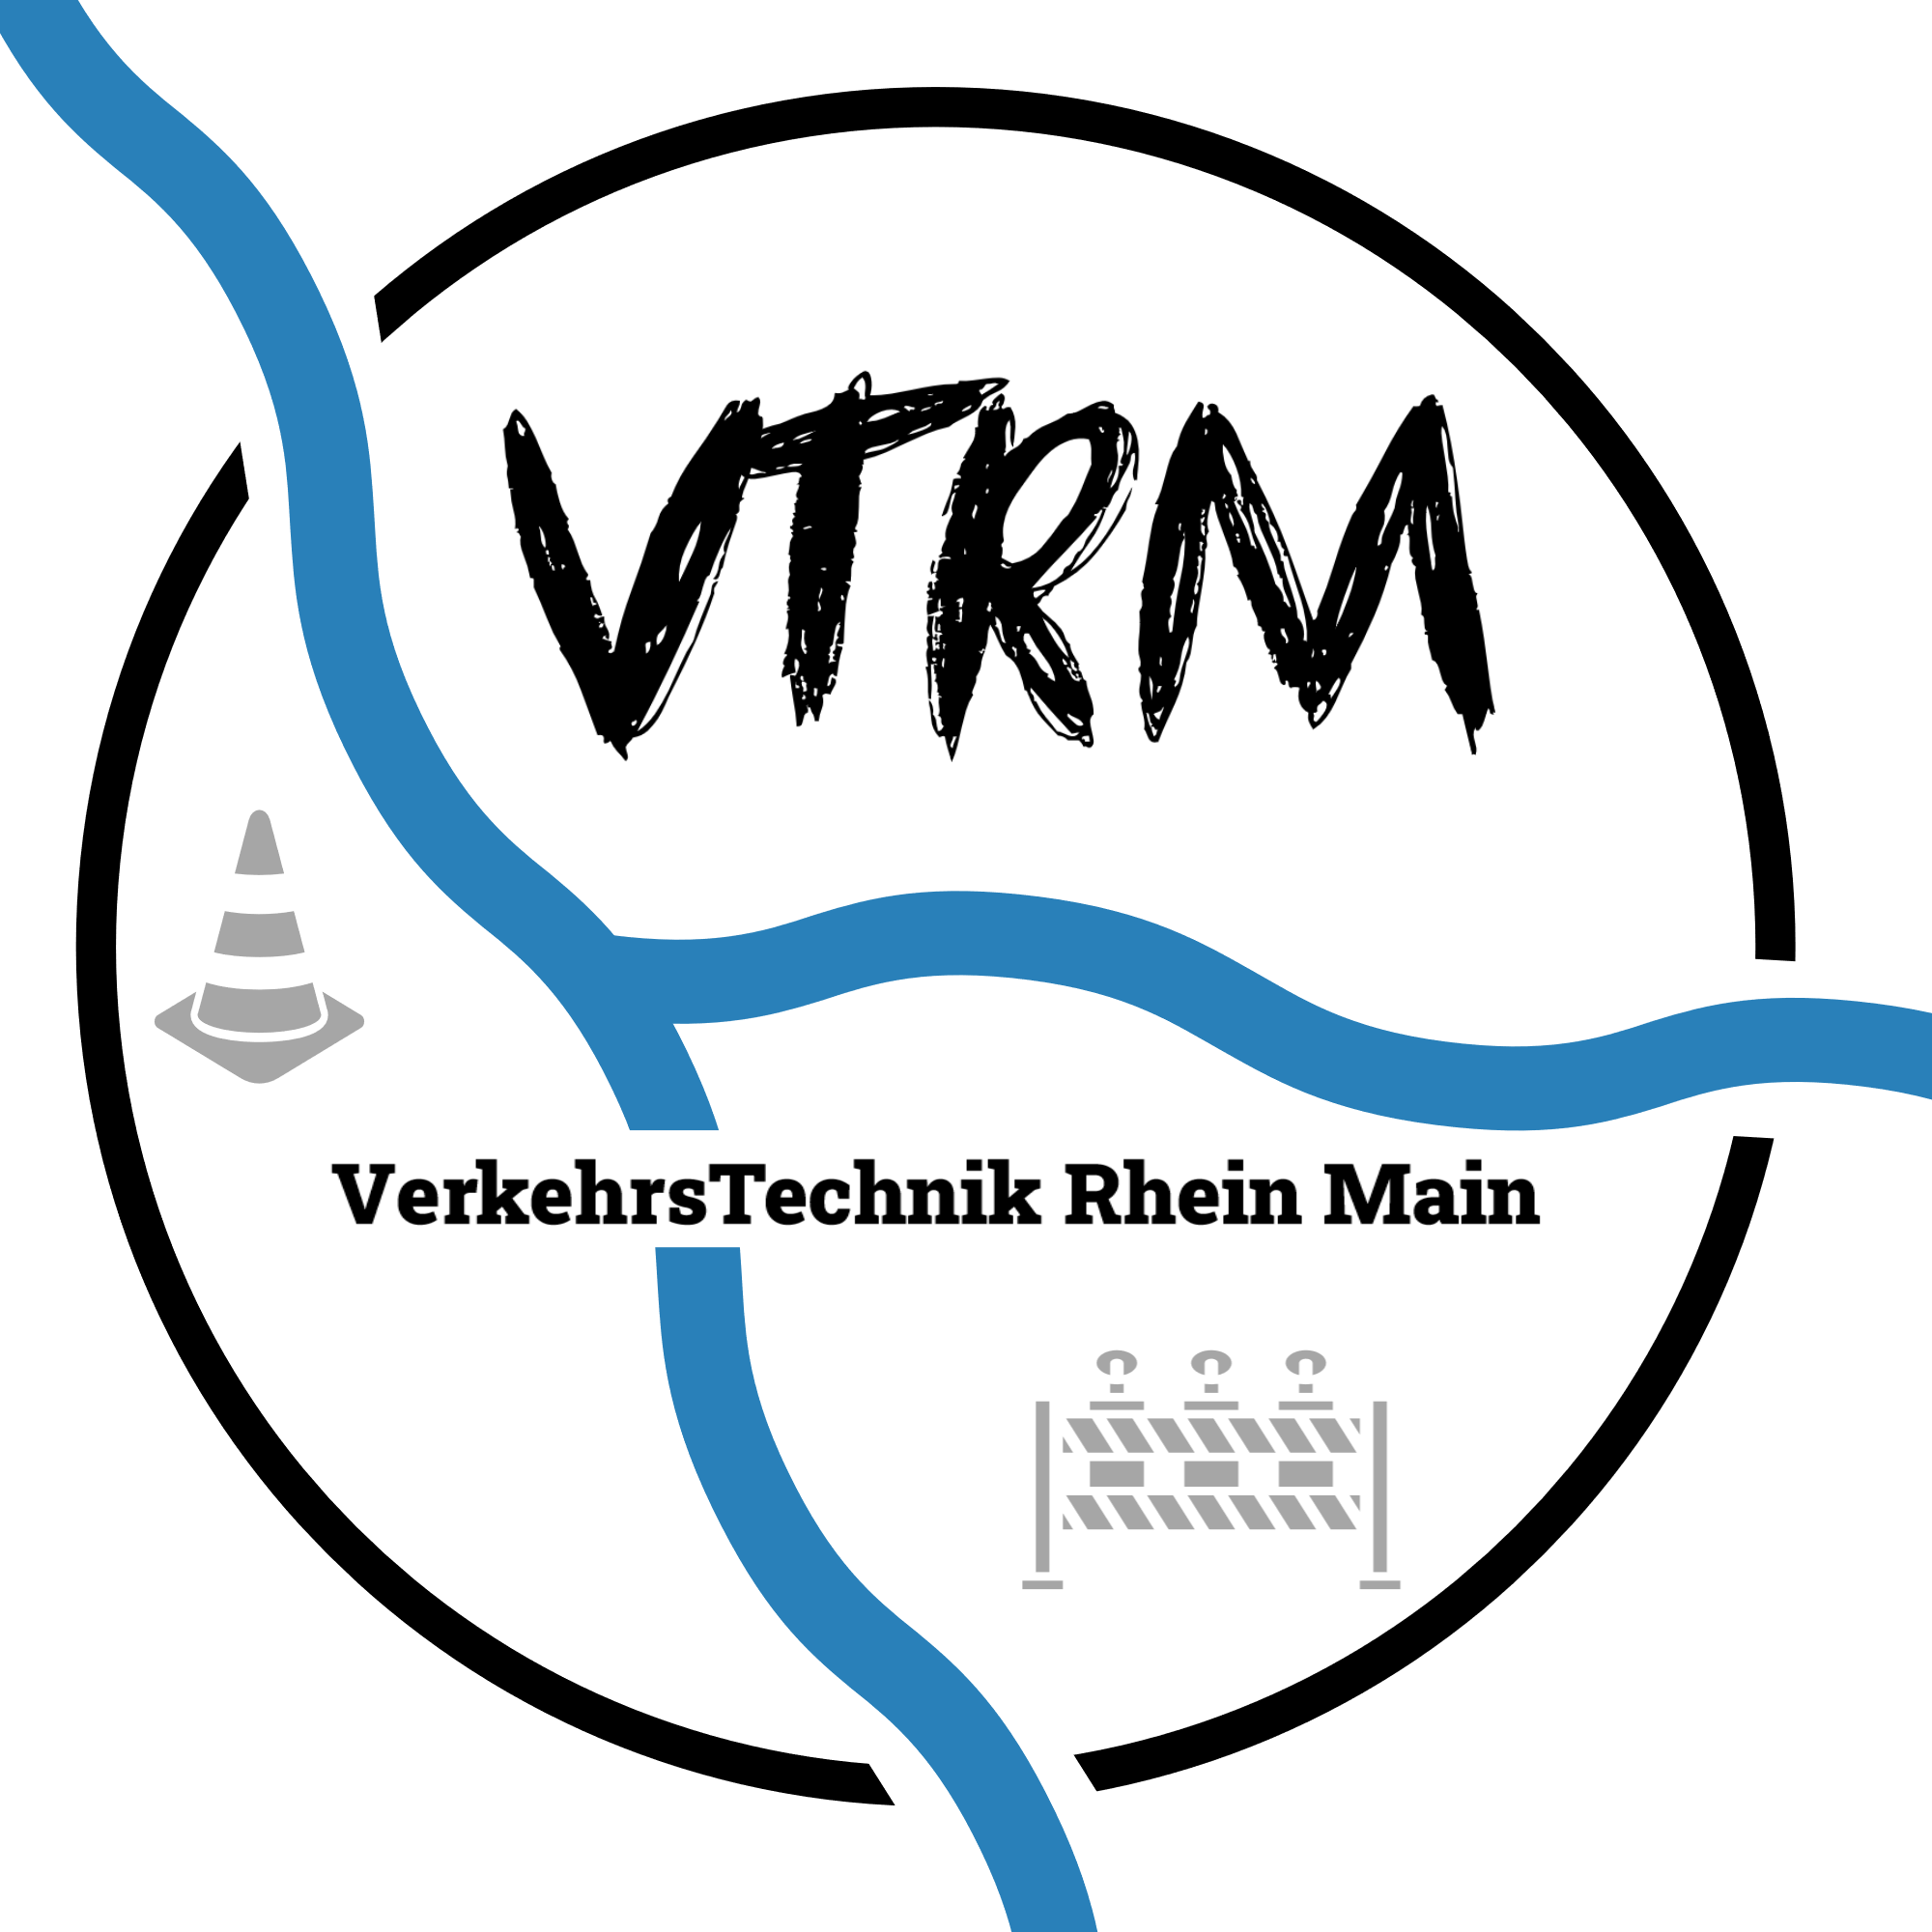 VerkehrsTechnik Rhein Main